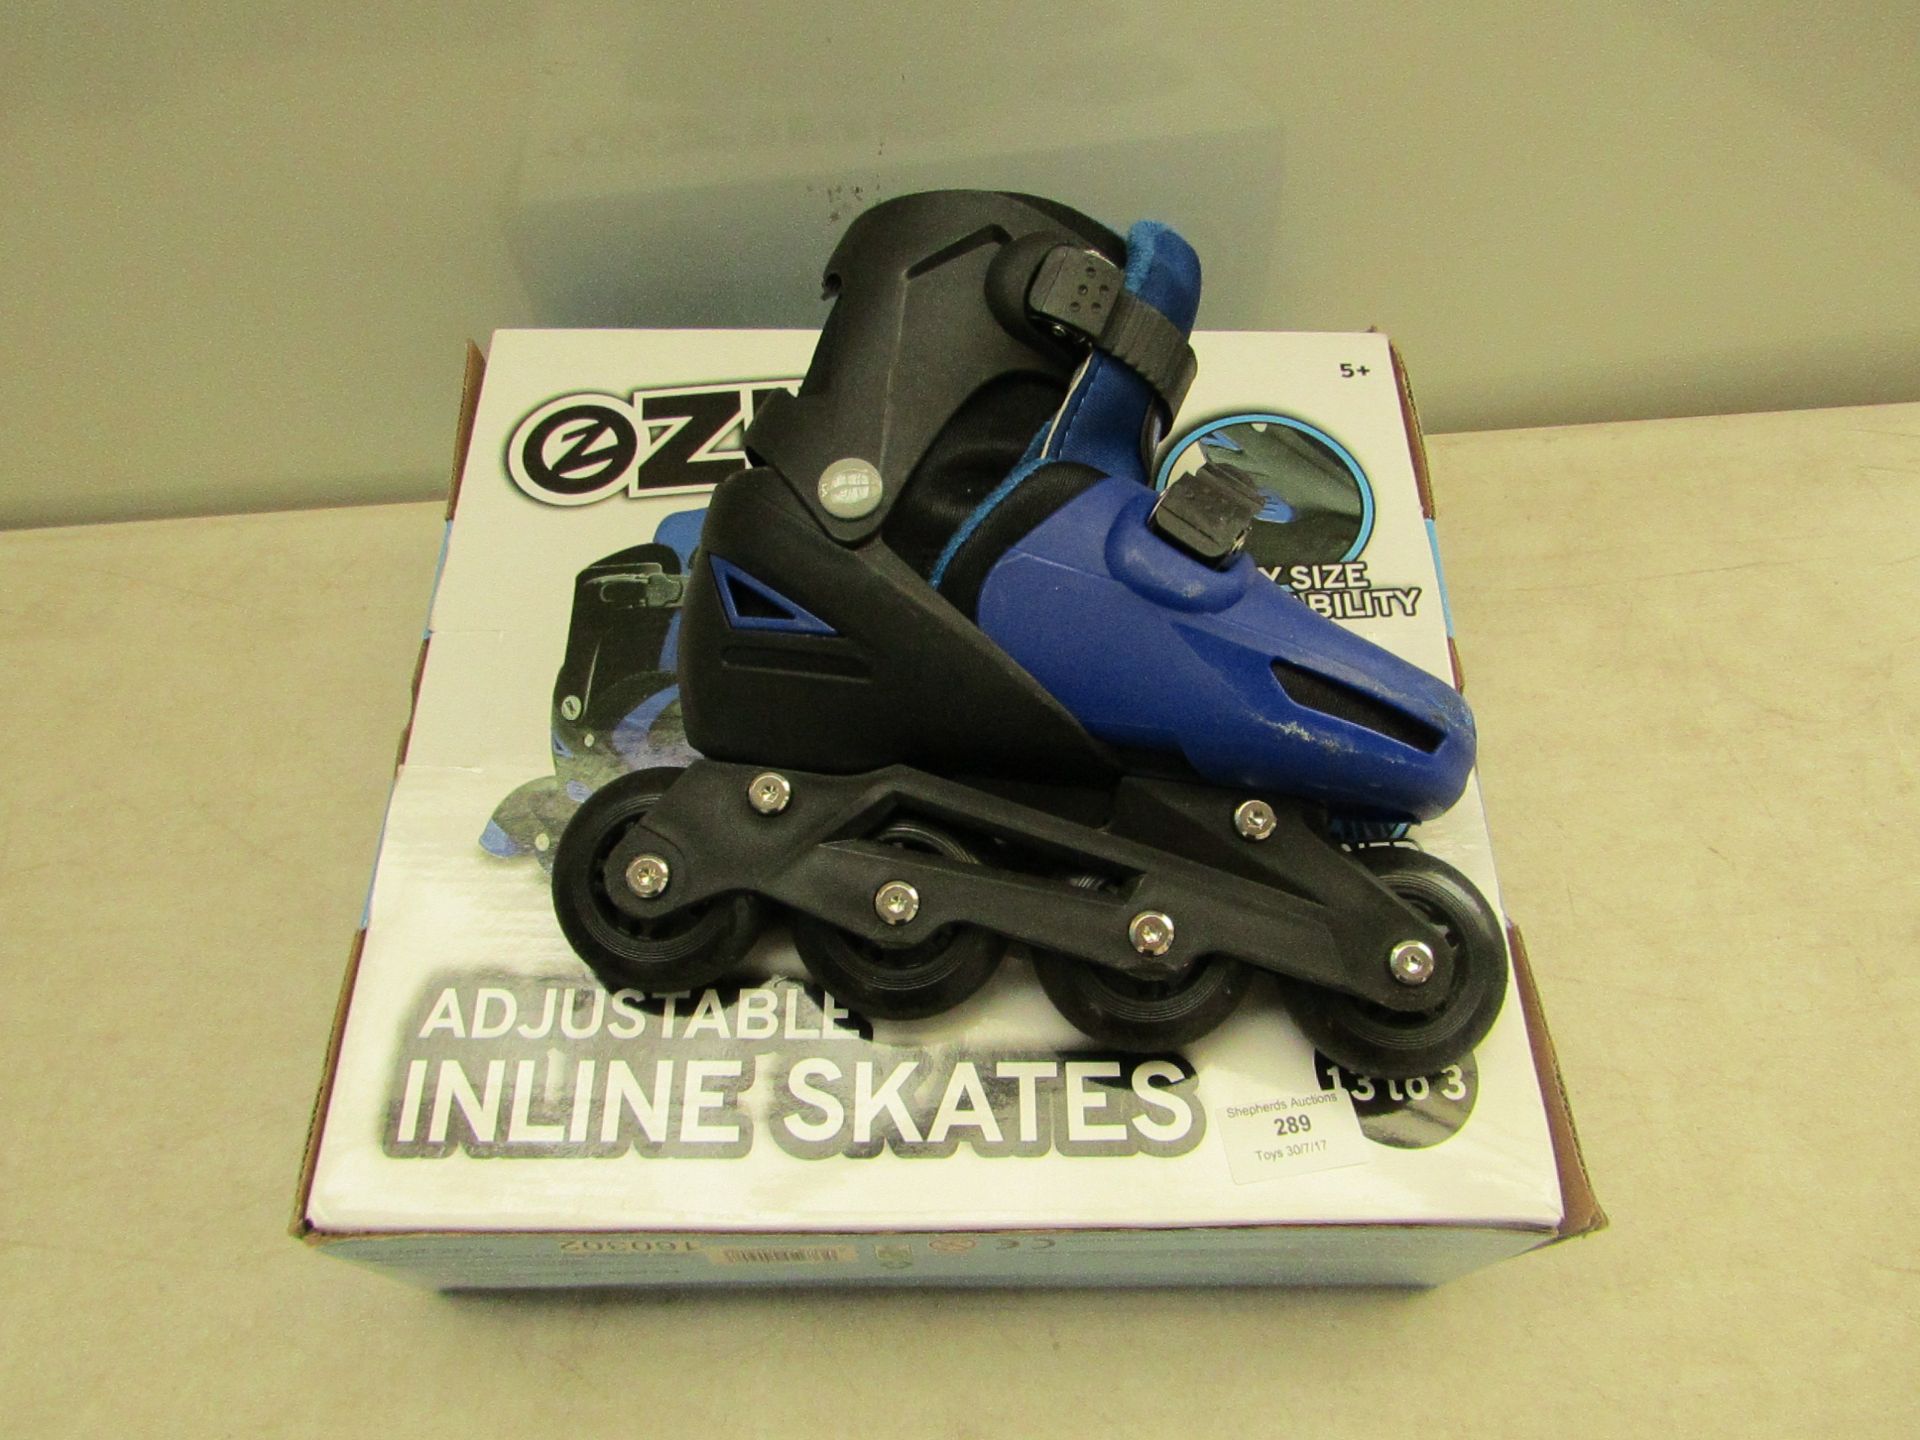 Ezinc adjustable inline skates, size 13 to 3, in packaging.